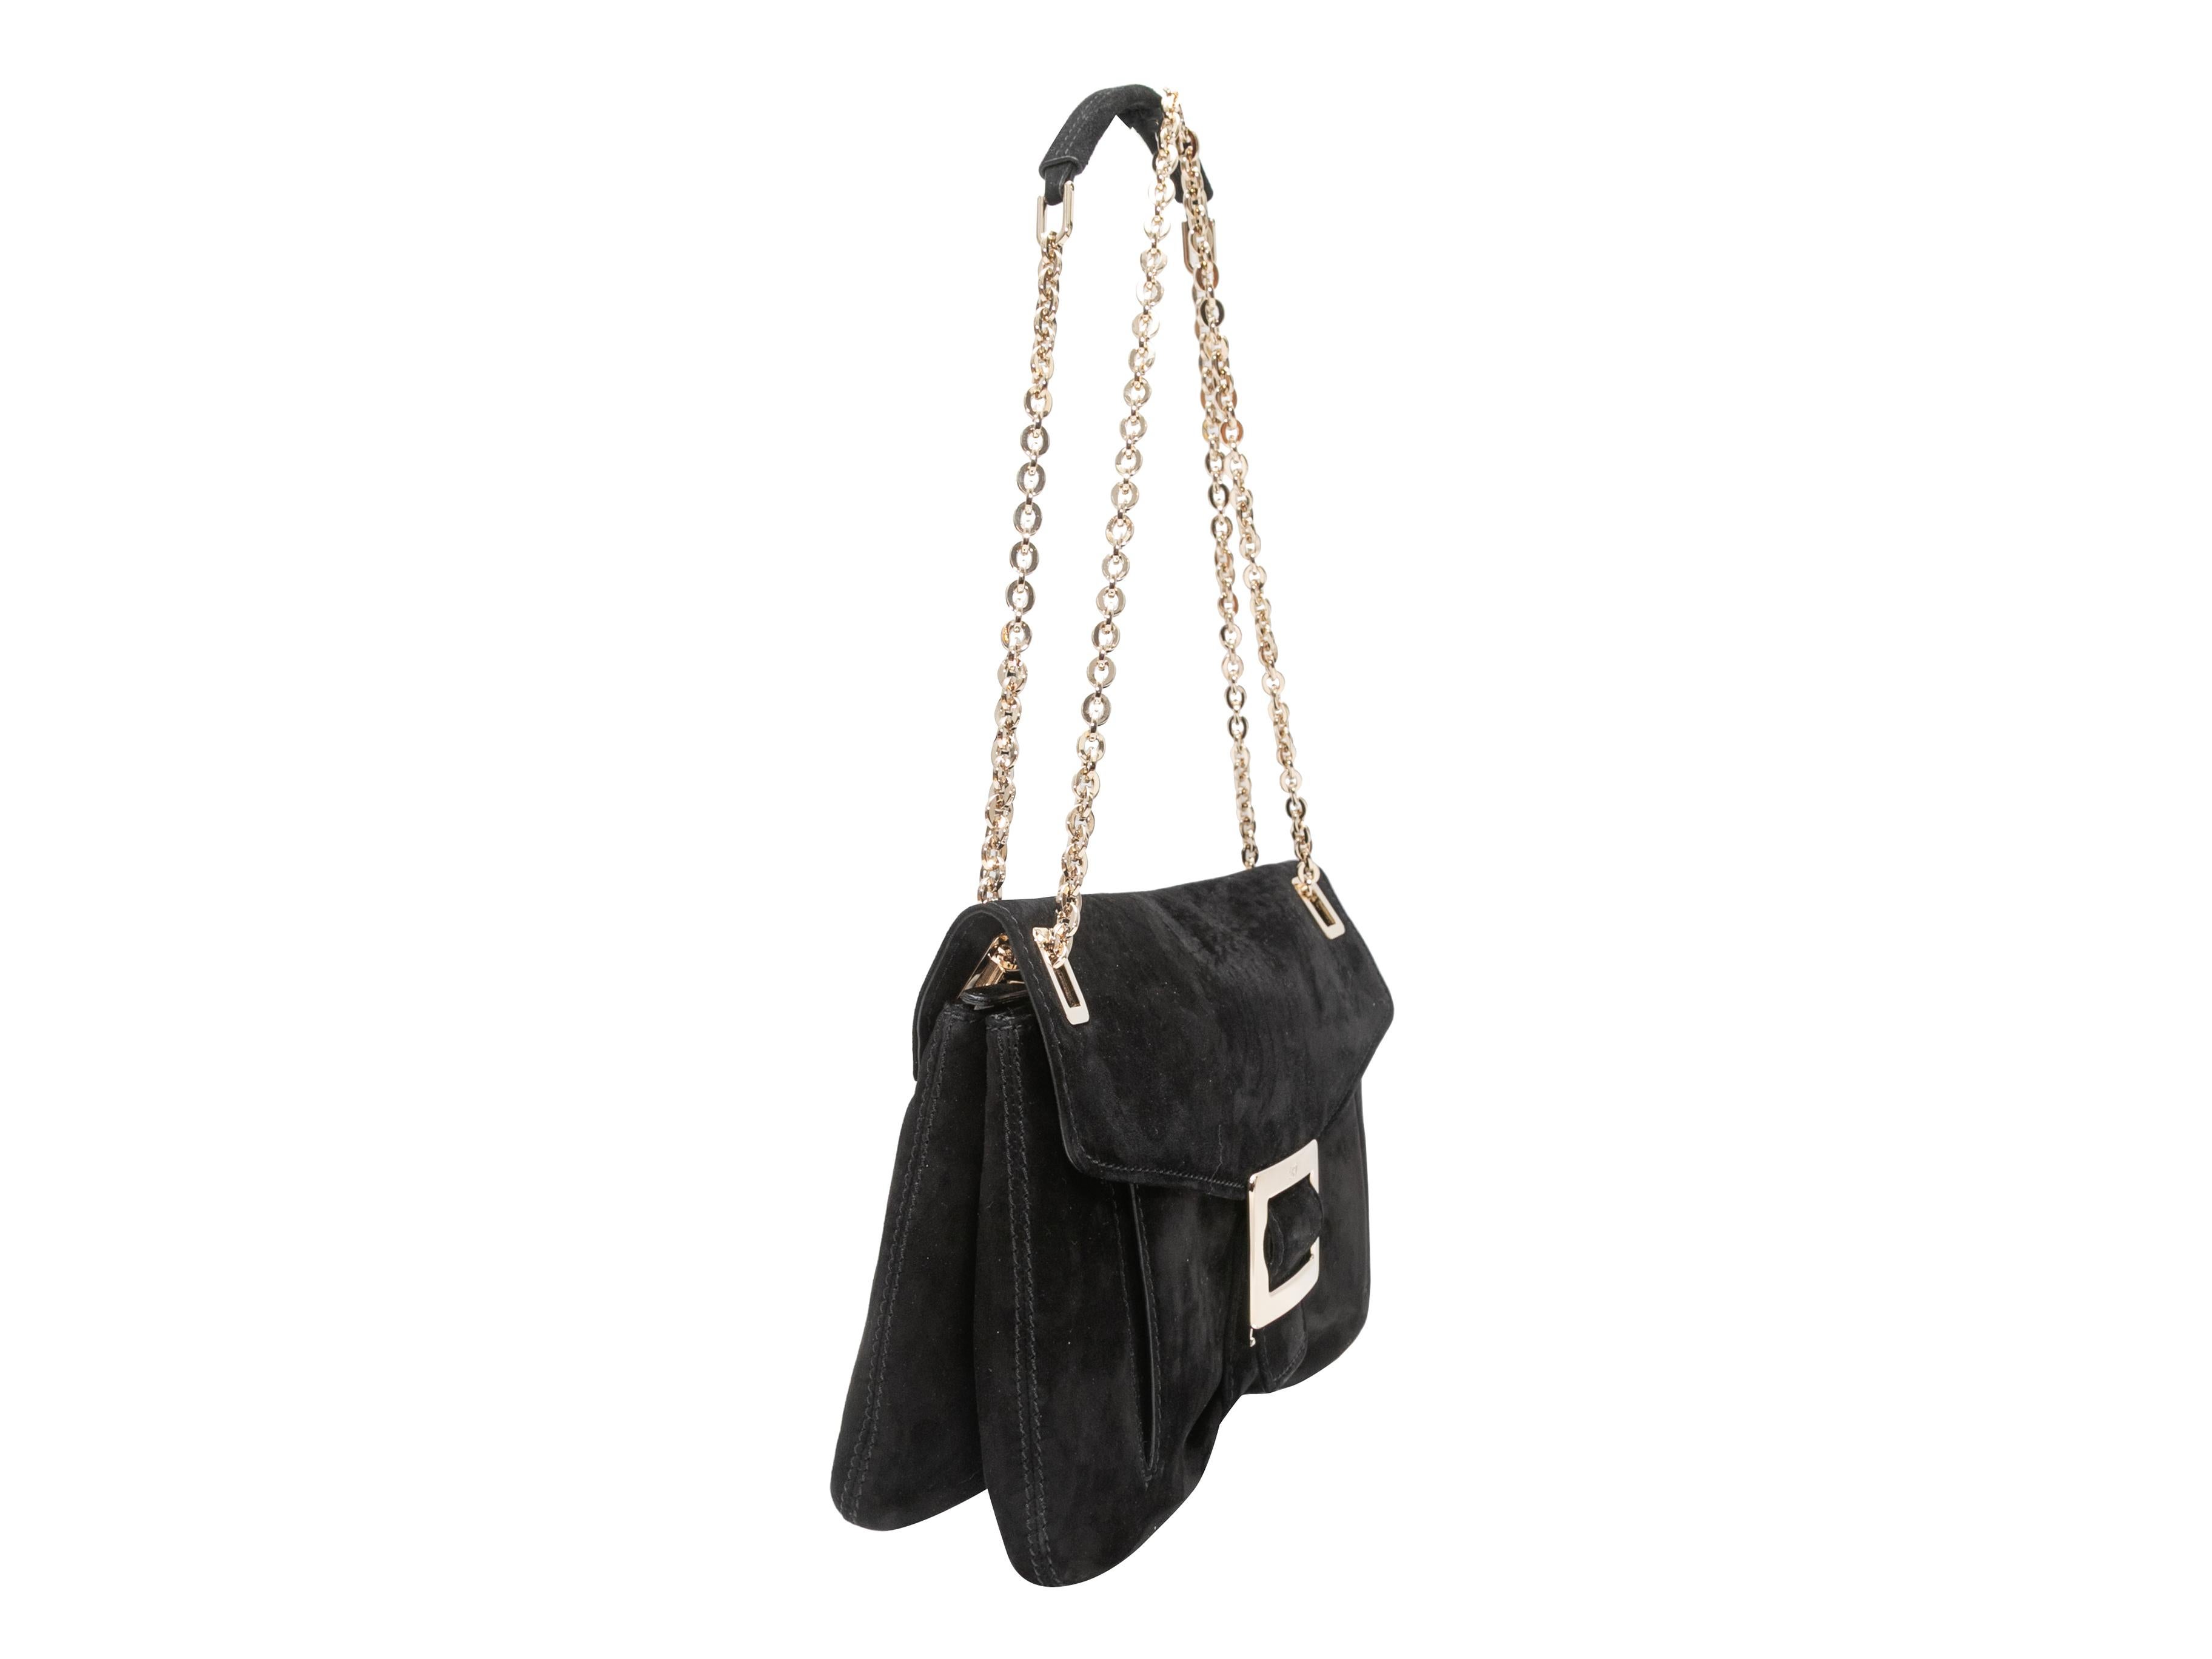 Black Roger Vivier Suede Shoulder Bag. This shoulder bag features a suede body, gold-tone hardware, a single chain-link and suede shoulder strap, and a front flap closure. 12.75